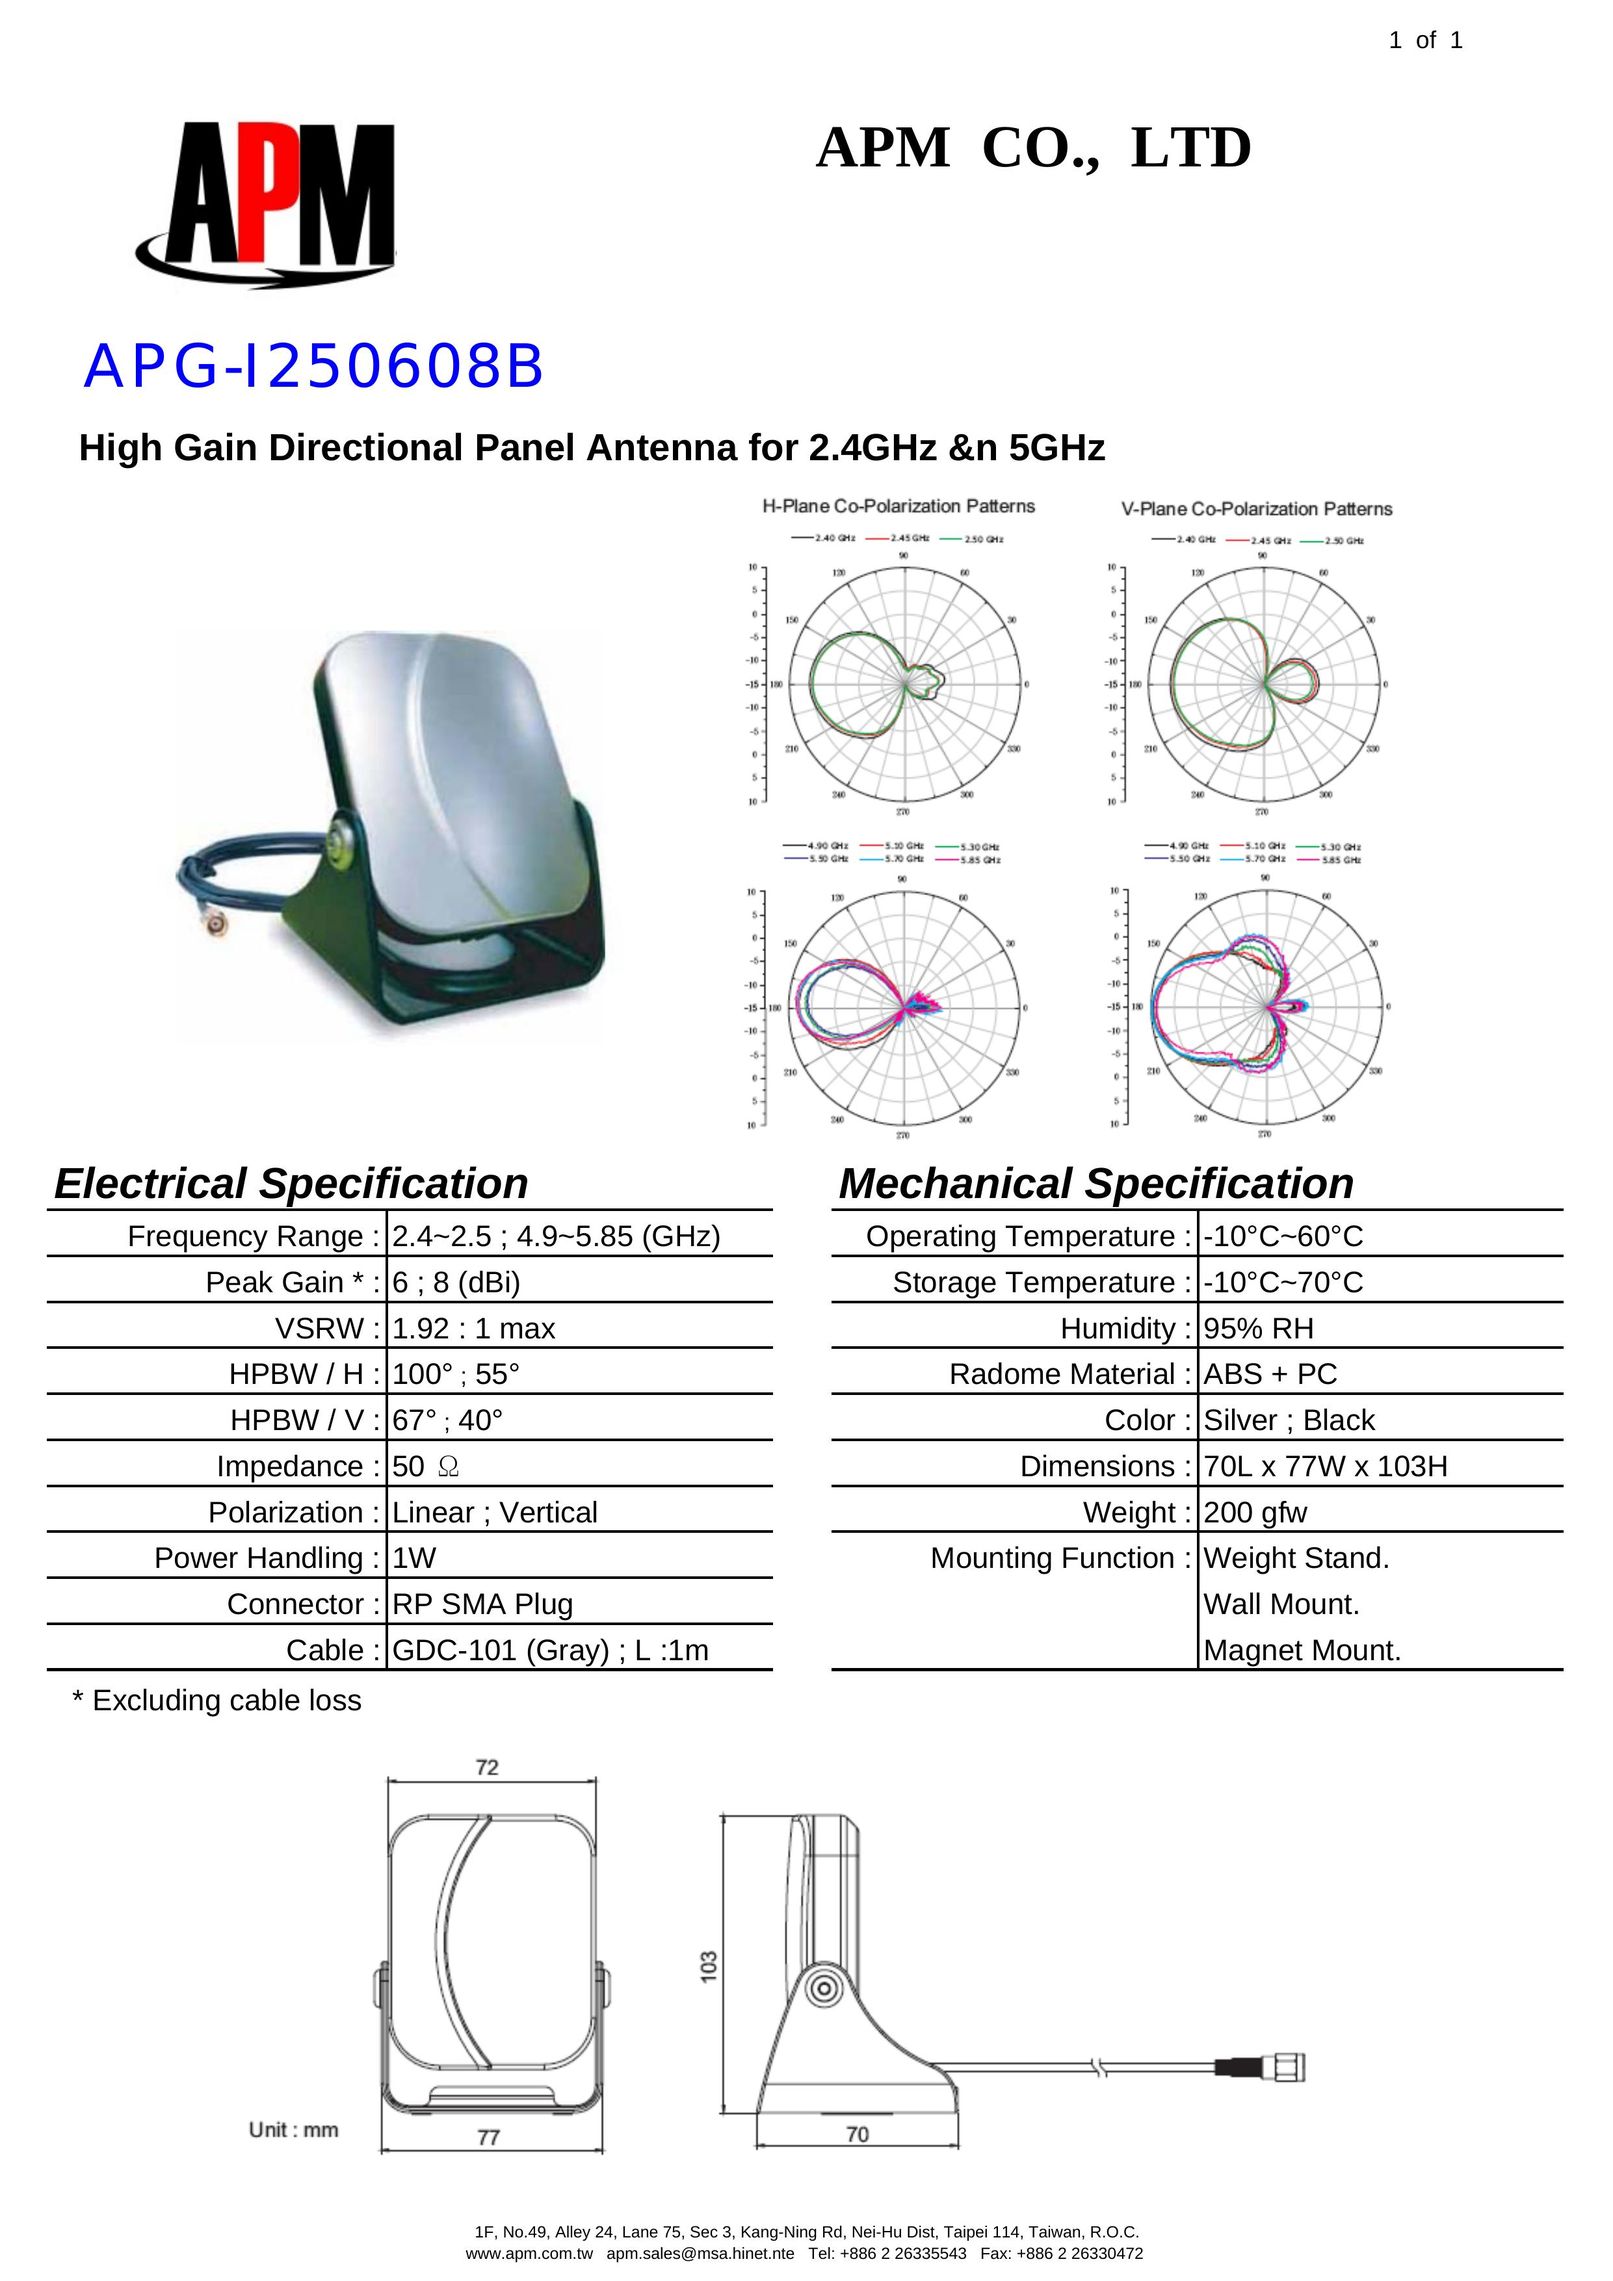 APM APG-I250608B Stereo System User Manual